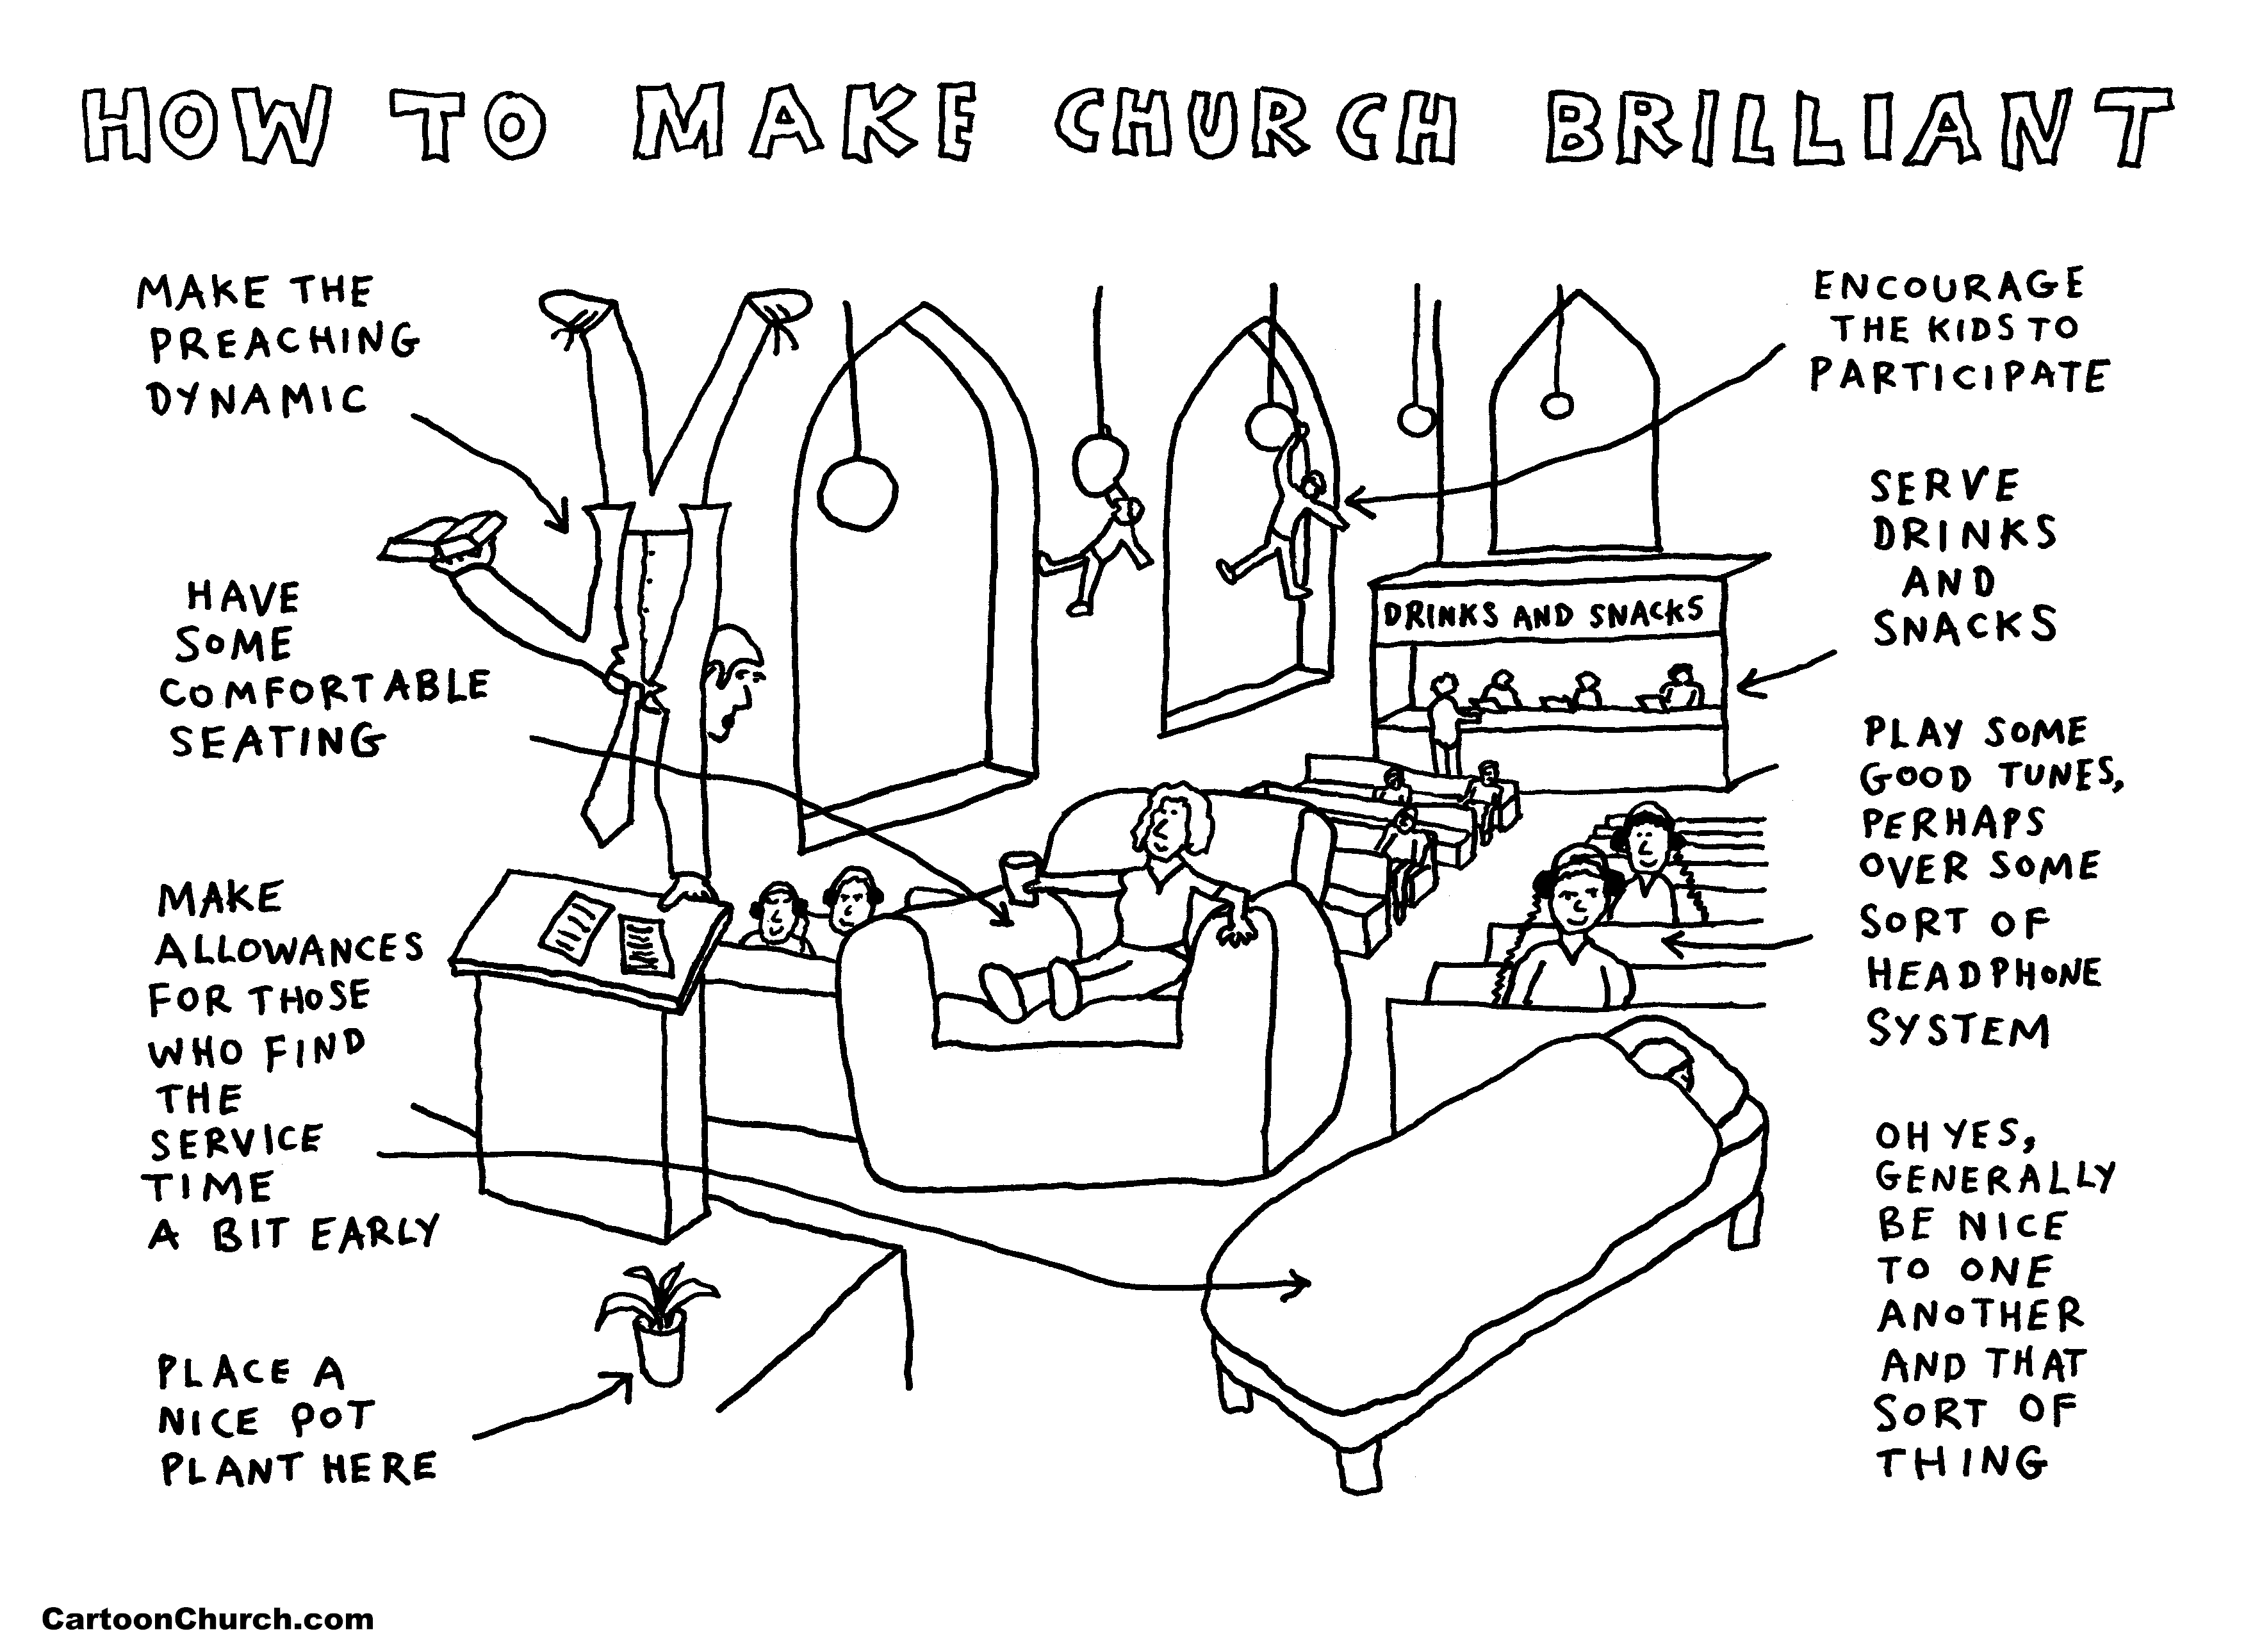 How to make church brilliant — CartoonChurch.com